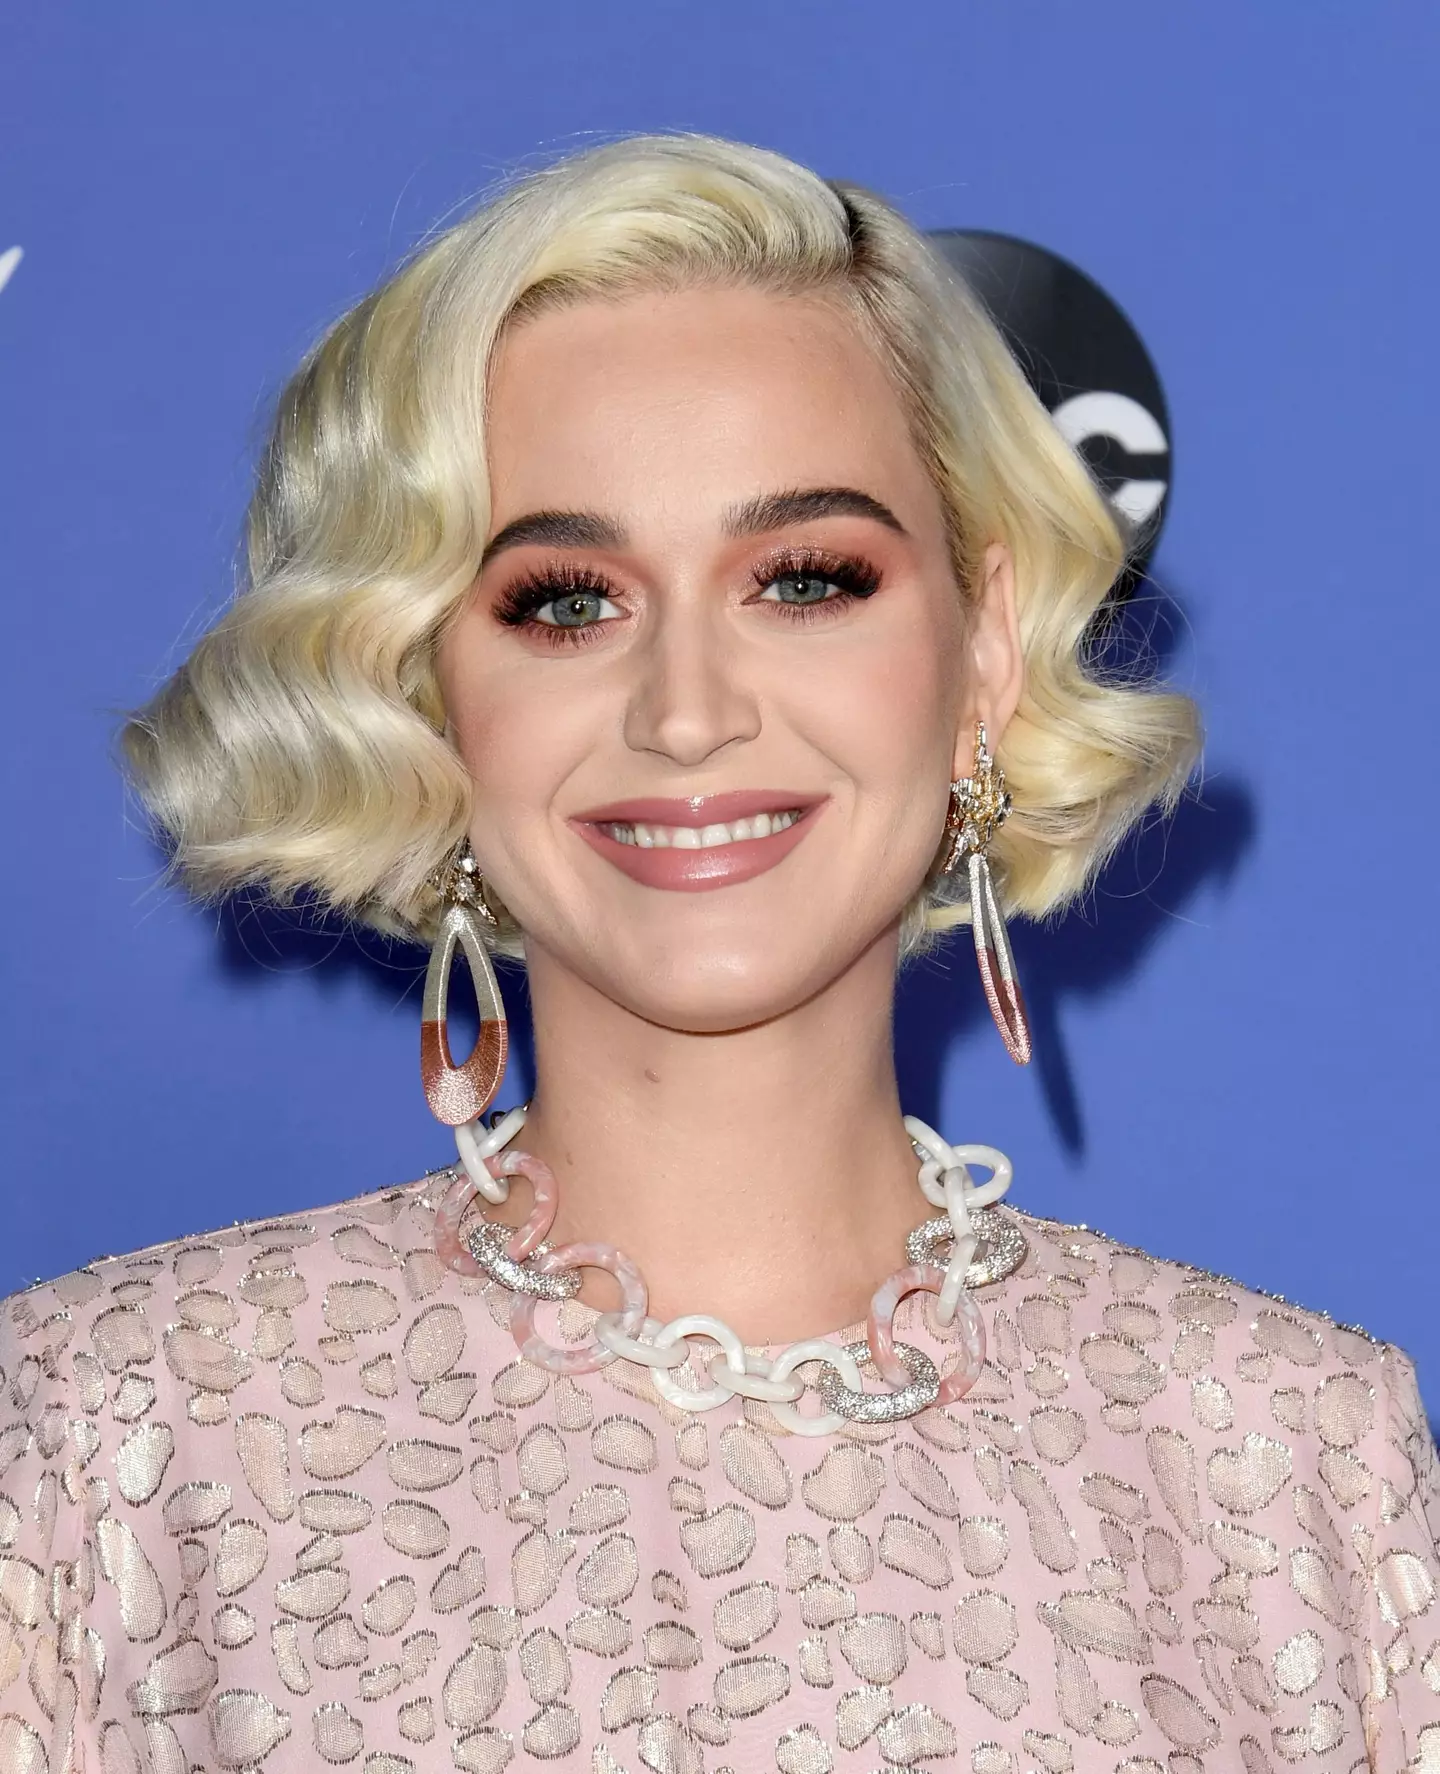 Katy Perry is locked in a legal dispute.